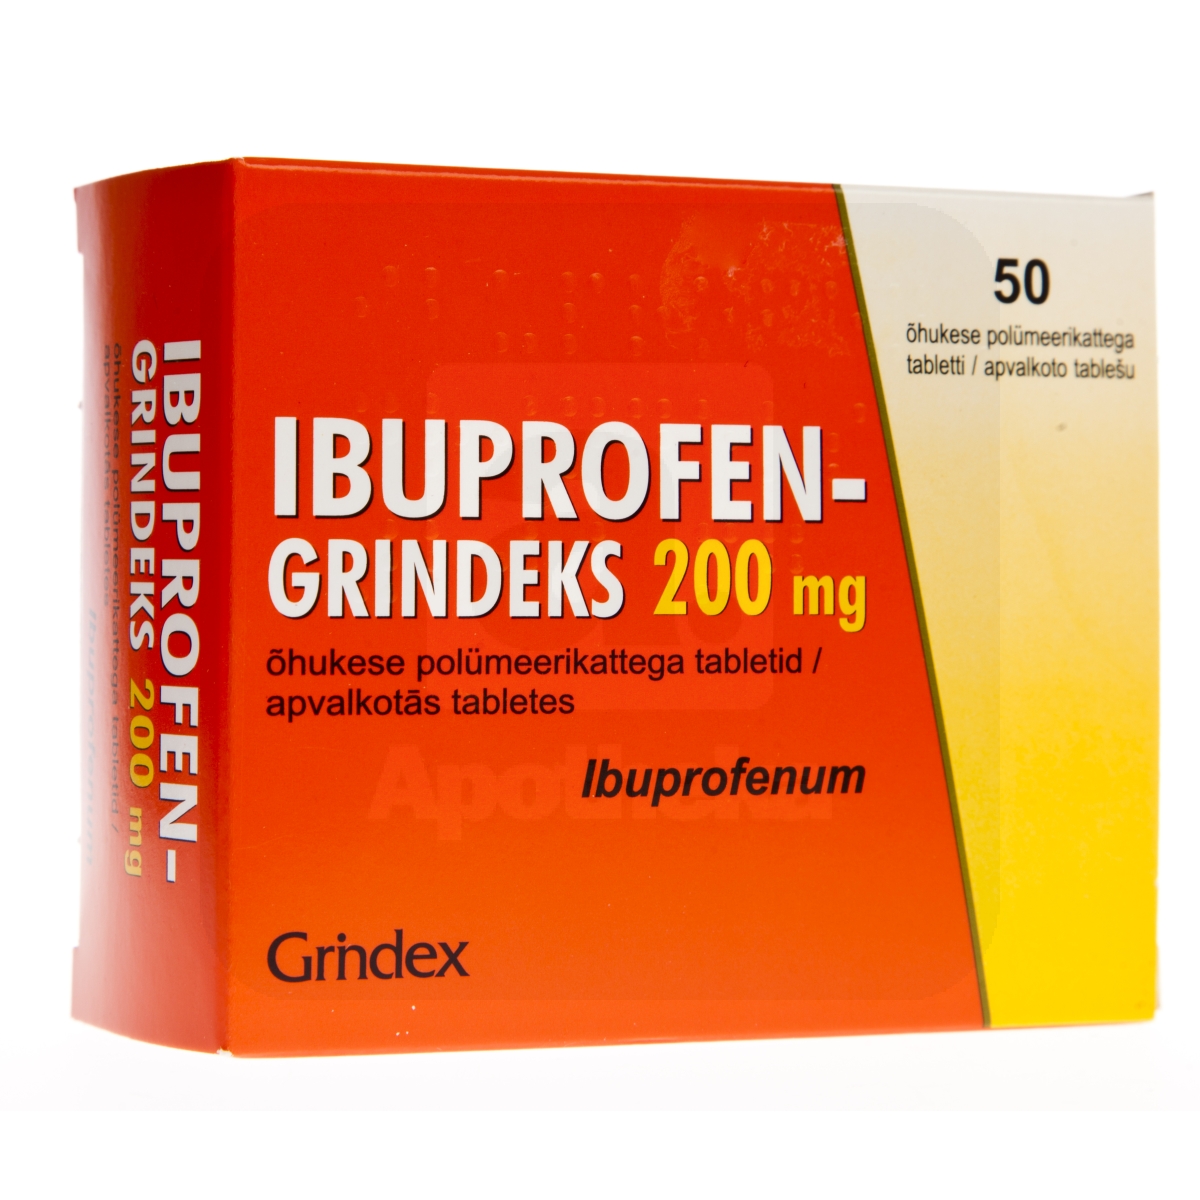 IBUPROFEN-GRINDEKS TBL 200MG N50